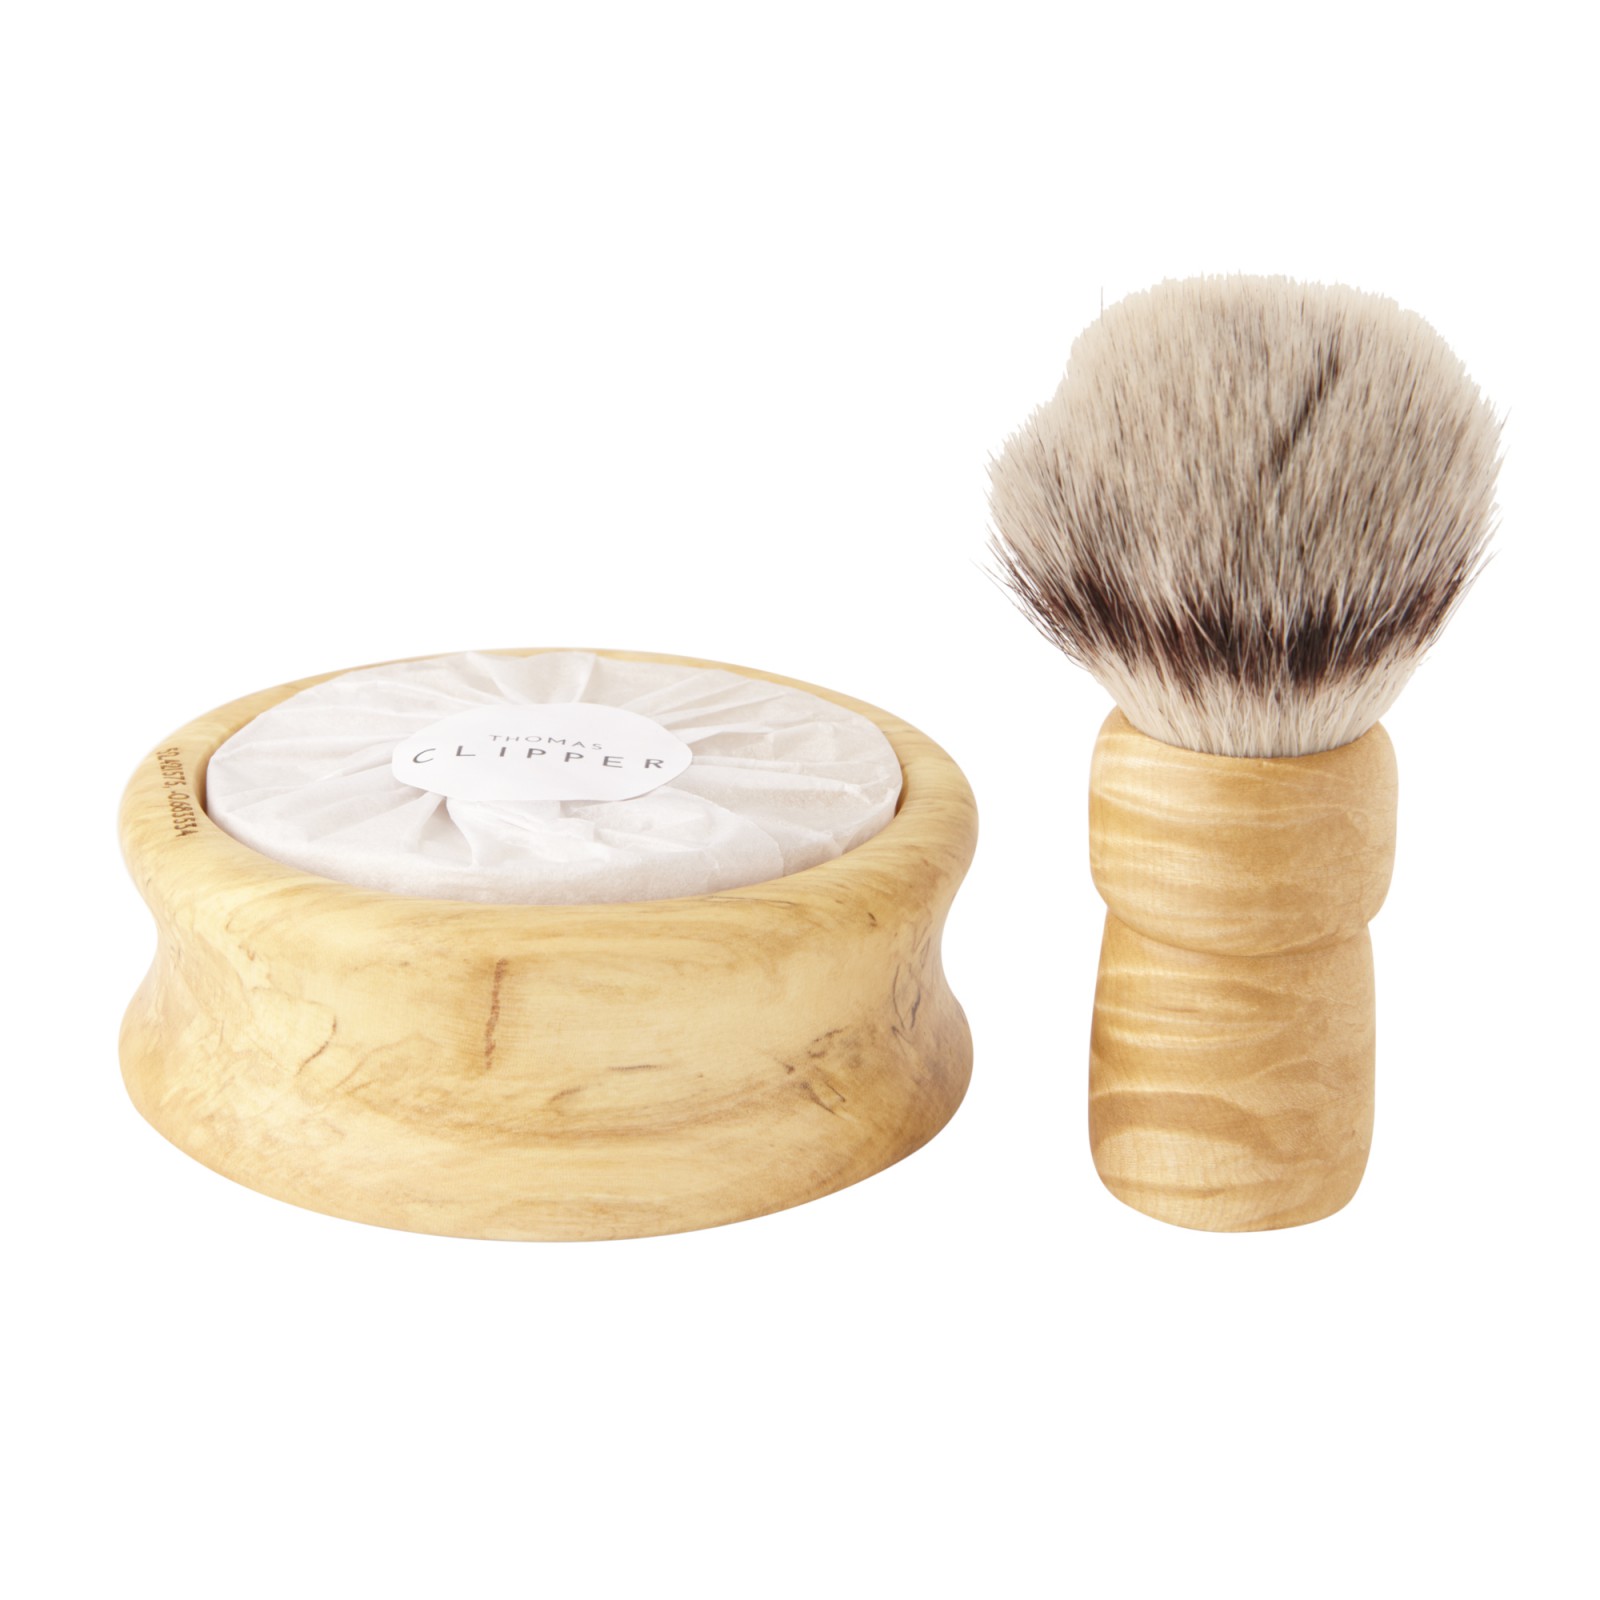 fortnum-mason-thomas-clipper-heritage-shaving-set-150